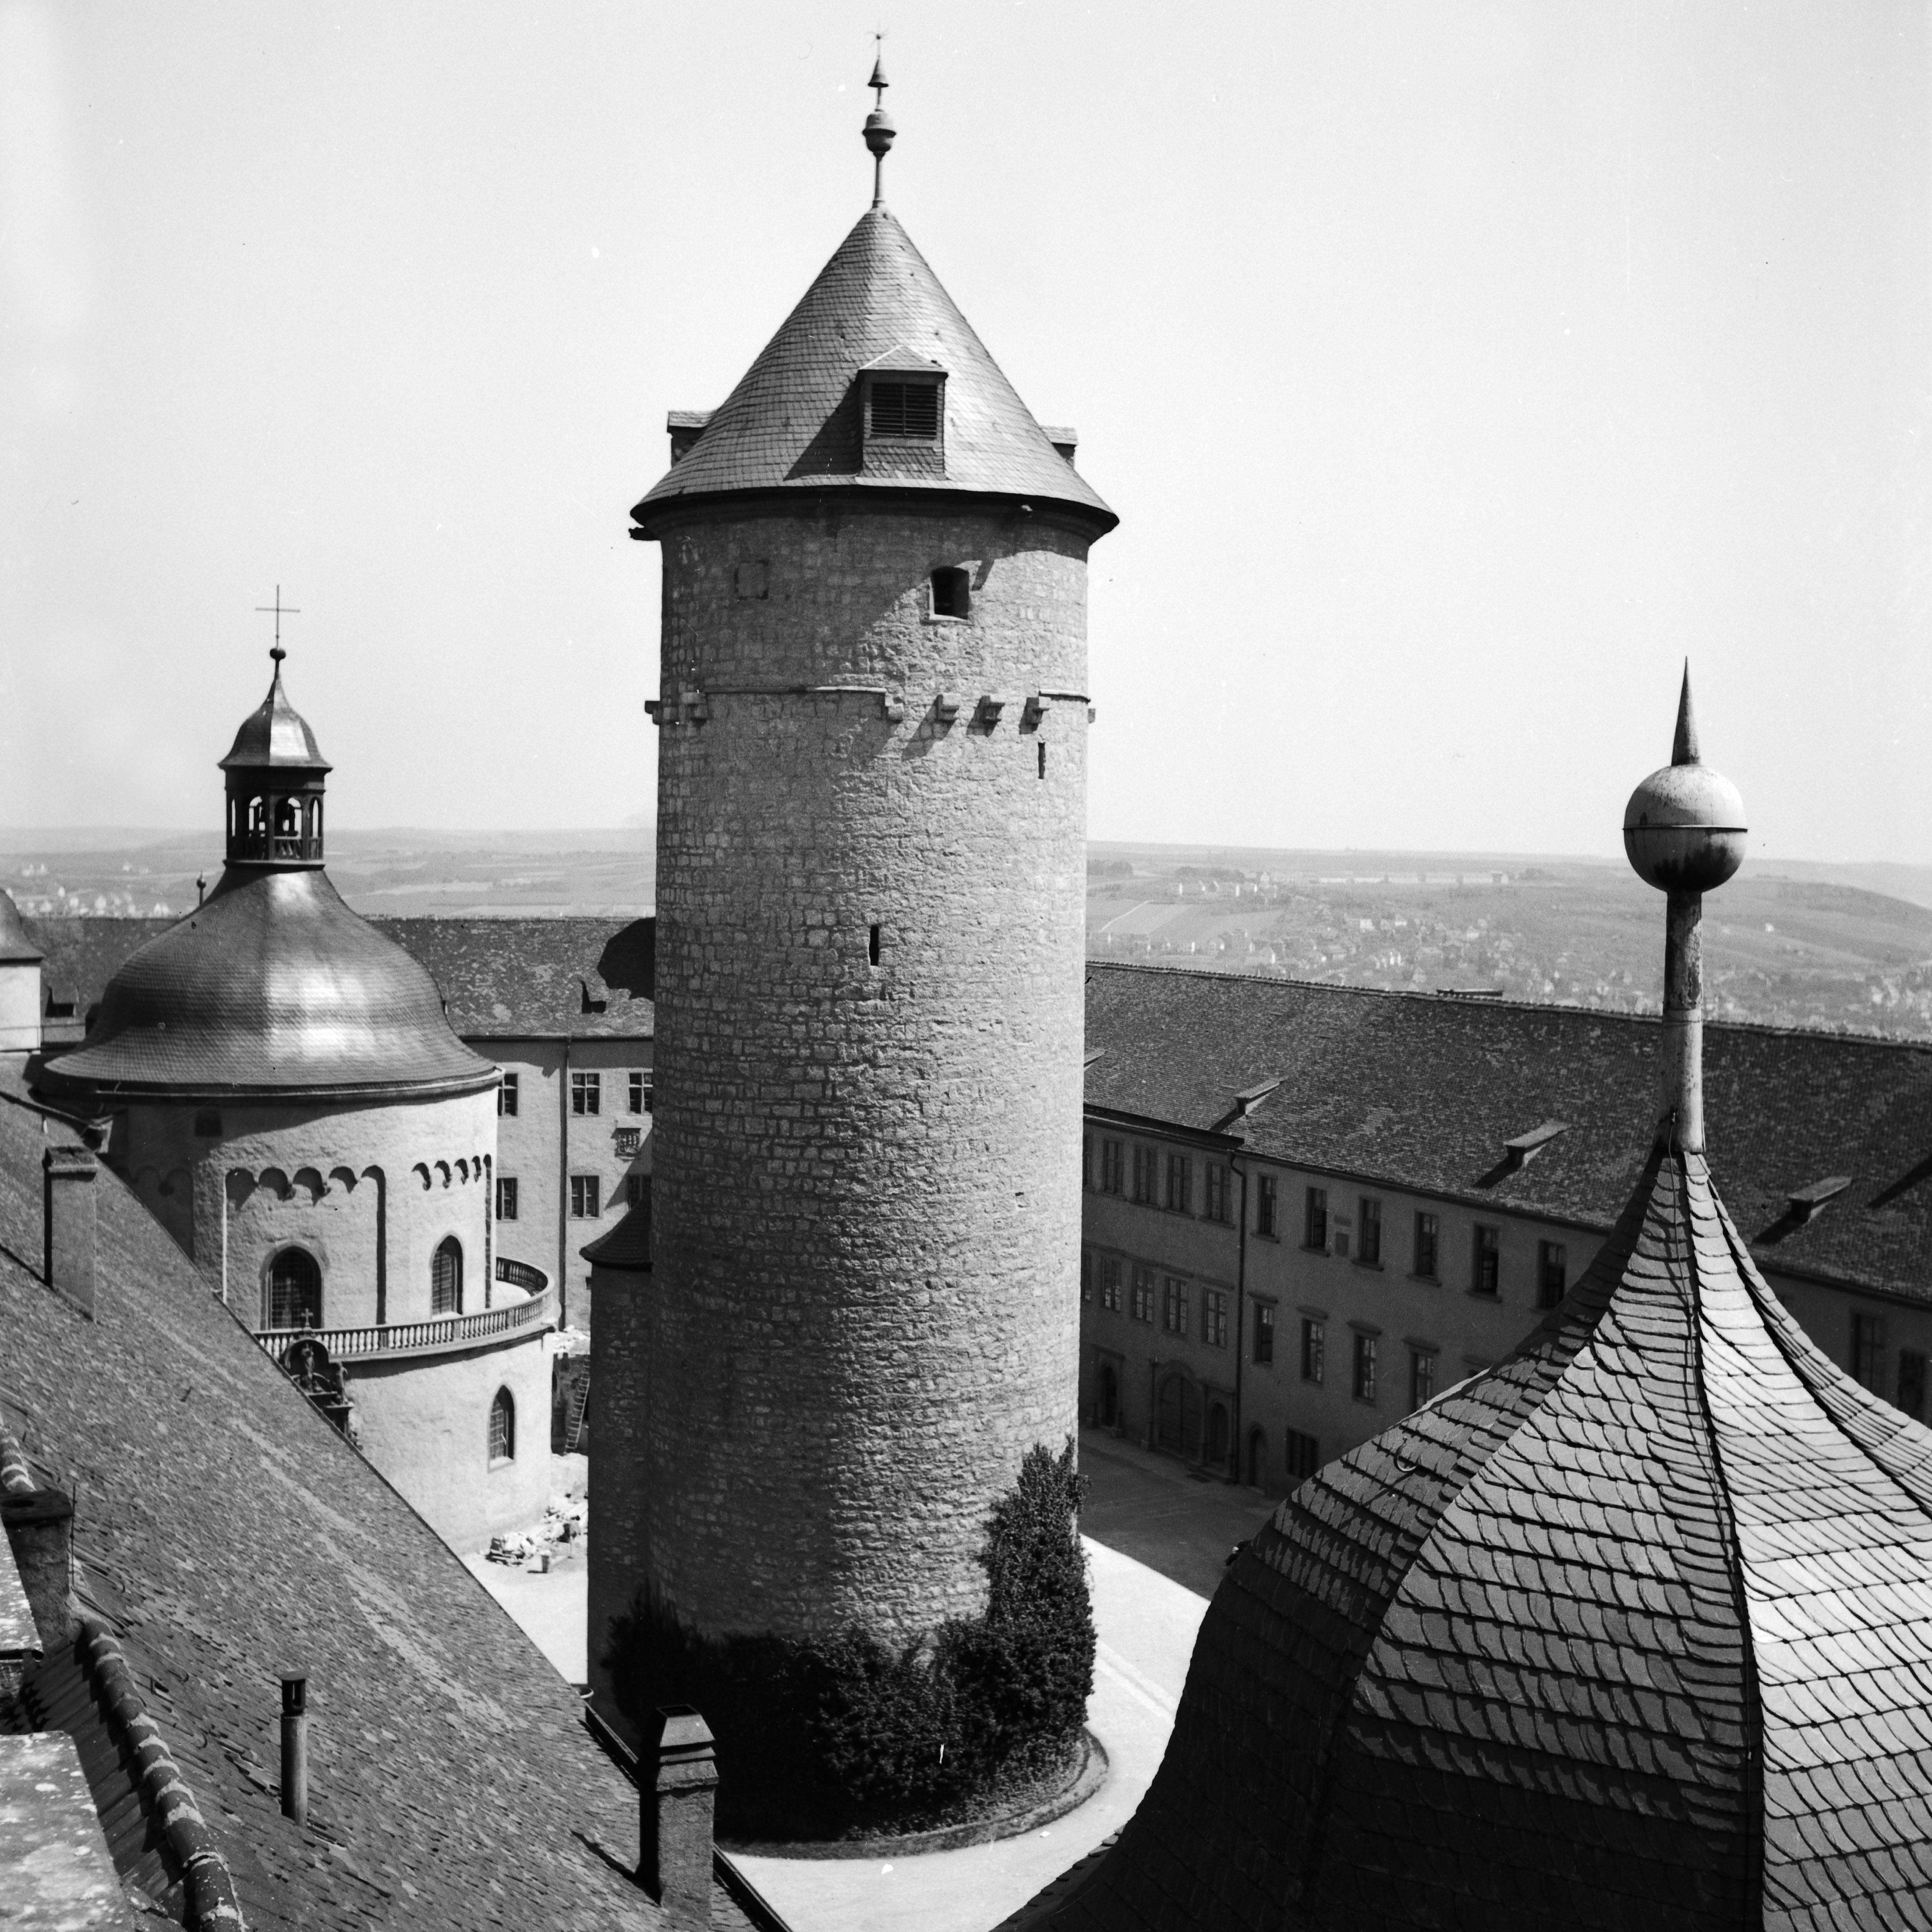 Black and White Photograph Karl Heinrich Lämmel - Wrzburg, Allemagne 1935, Imprimé ultérieurement